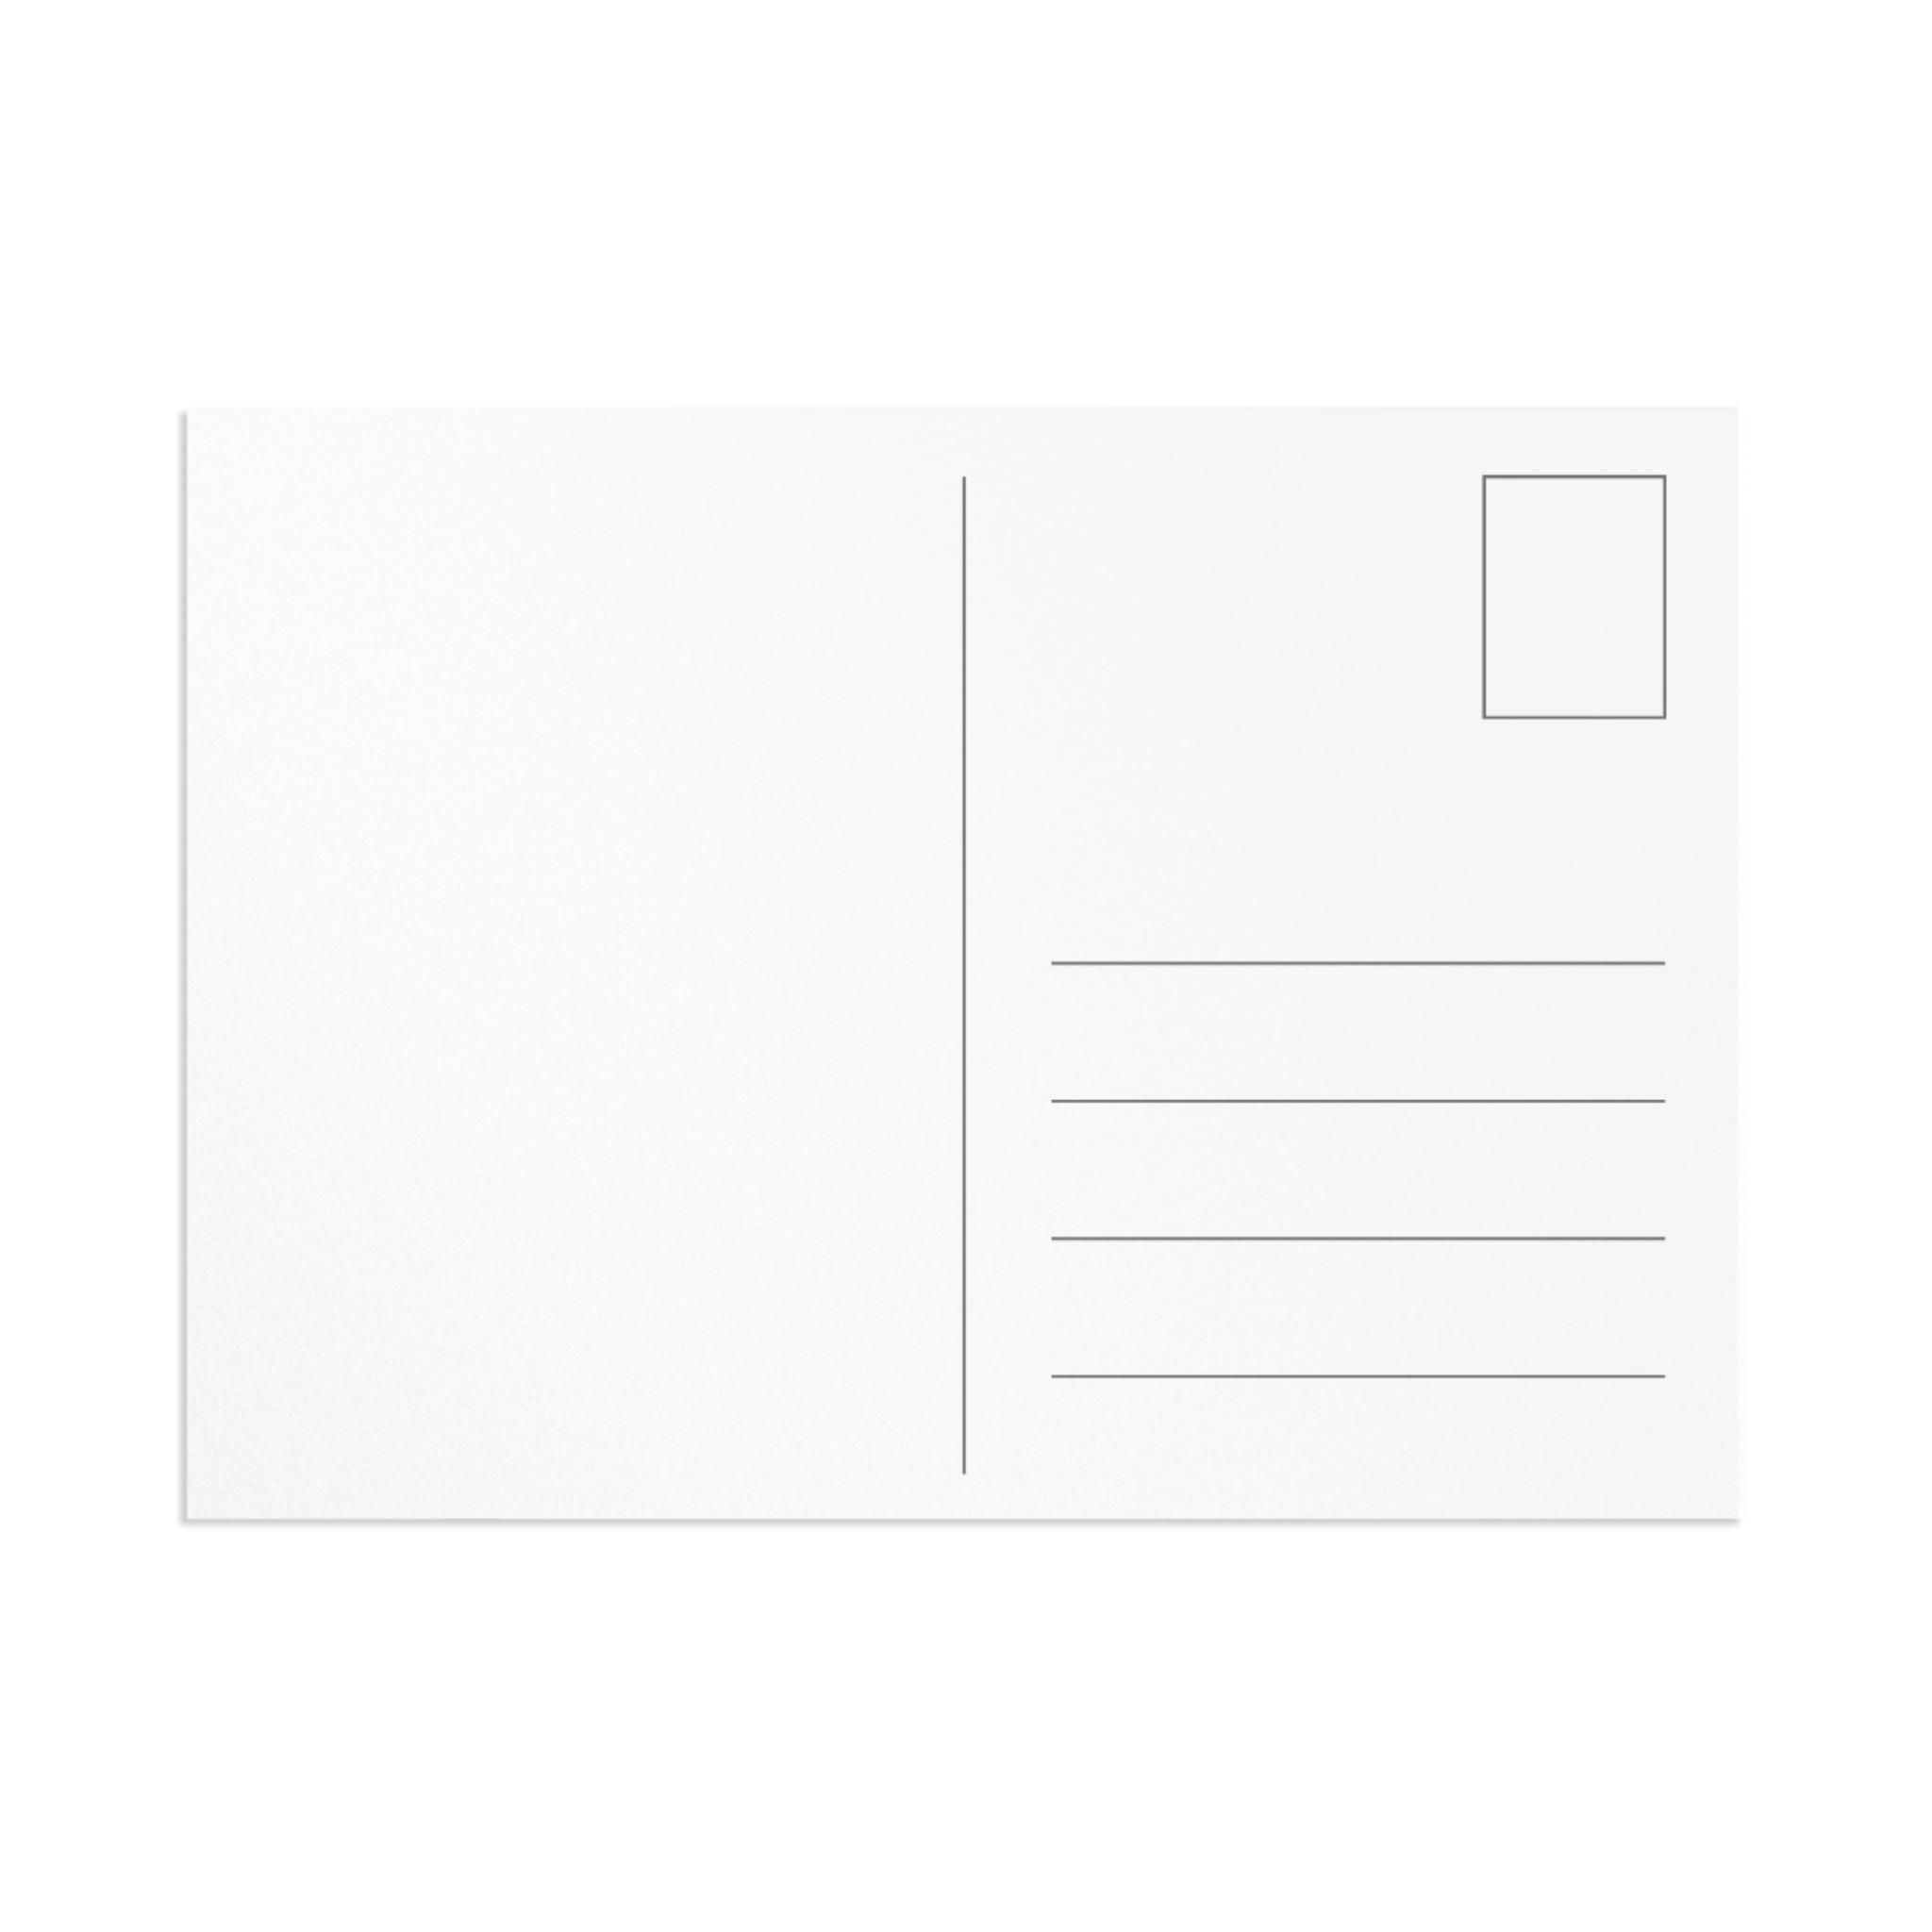 Celestia Nova with Sacred Geometry - 7'' x 5'' (17.8cm x 12.7cm) - Soulshinecreators - Card